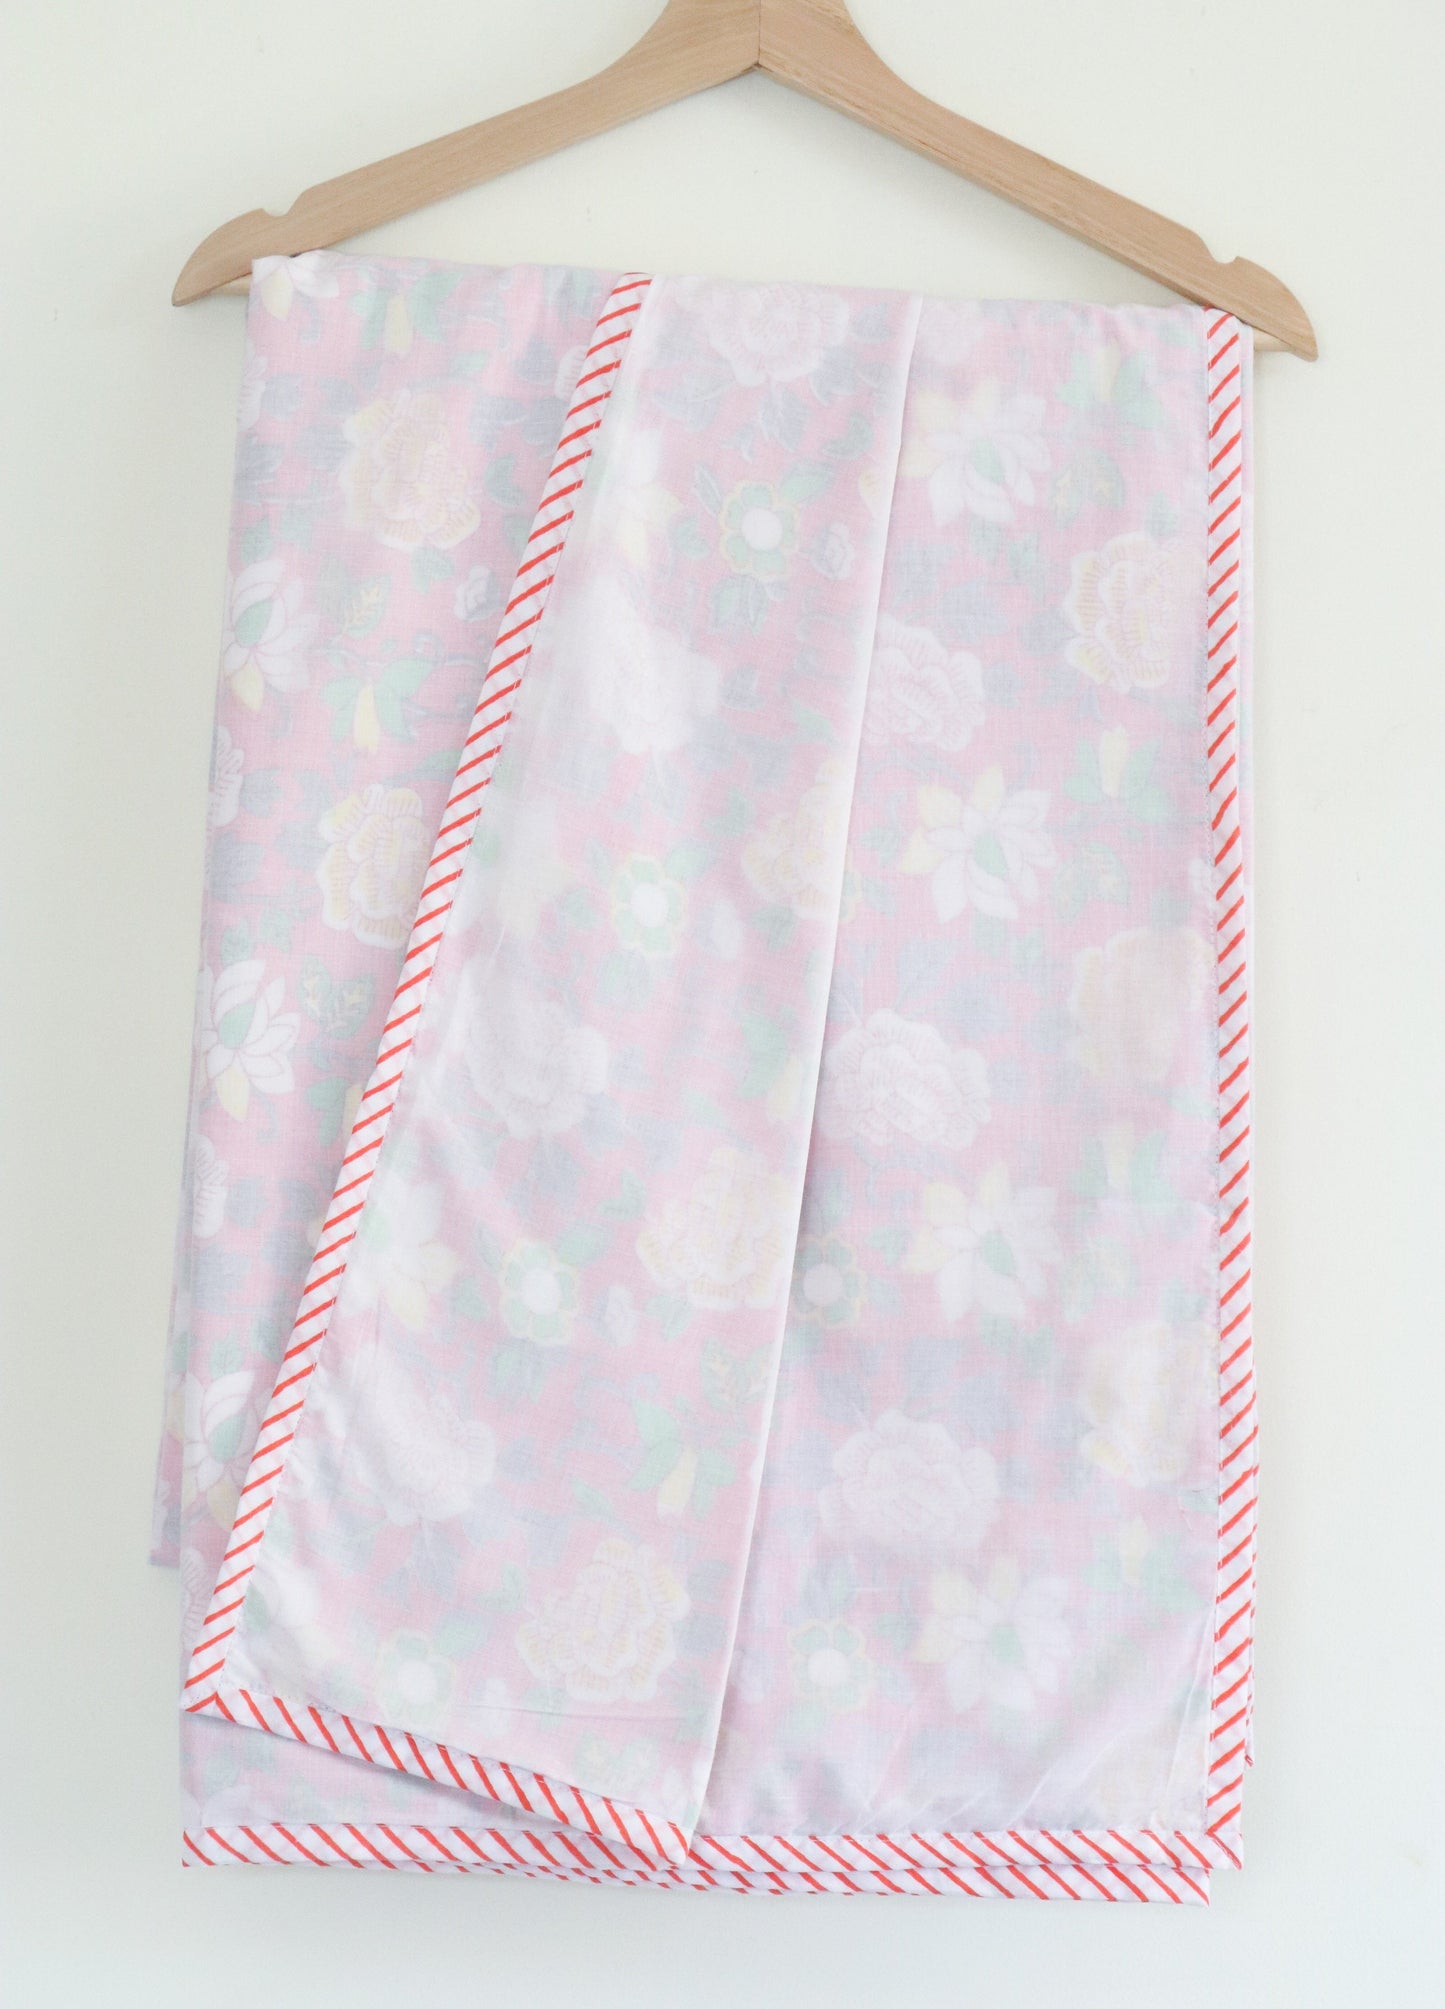 Single size AC Dohar - Block print cotton dohar - 60x90 inches - Mul Dohar blanket - three layers cotton fabric